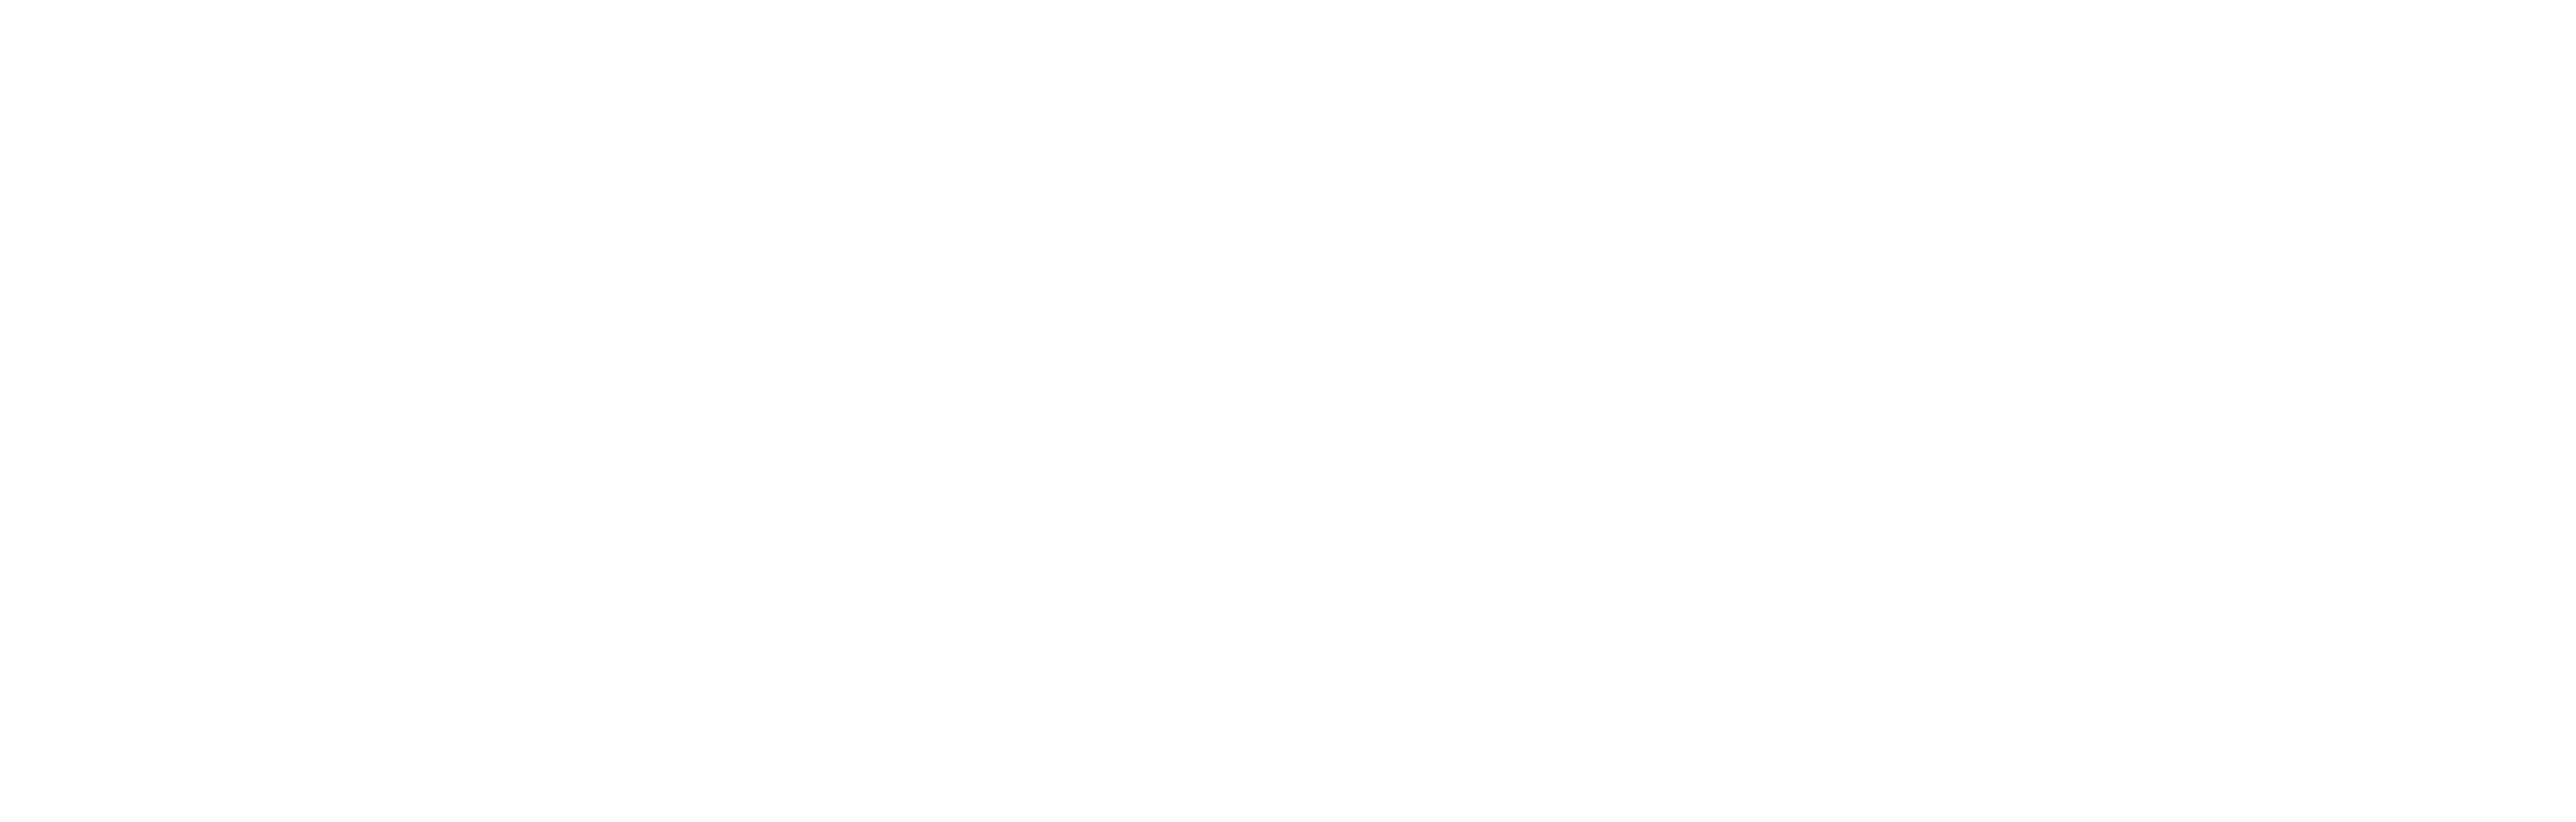 IVORY FUTURE